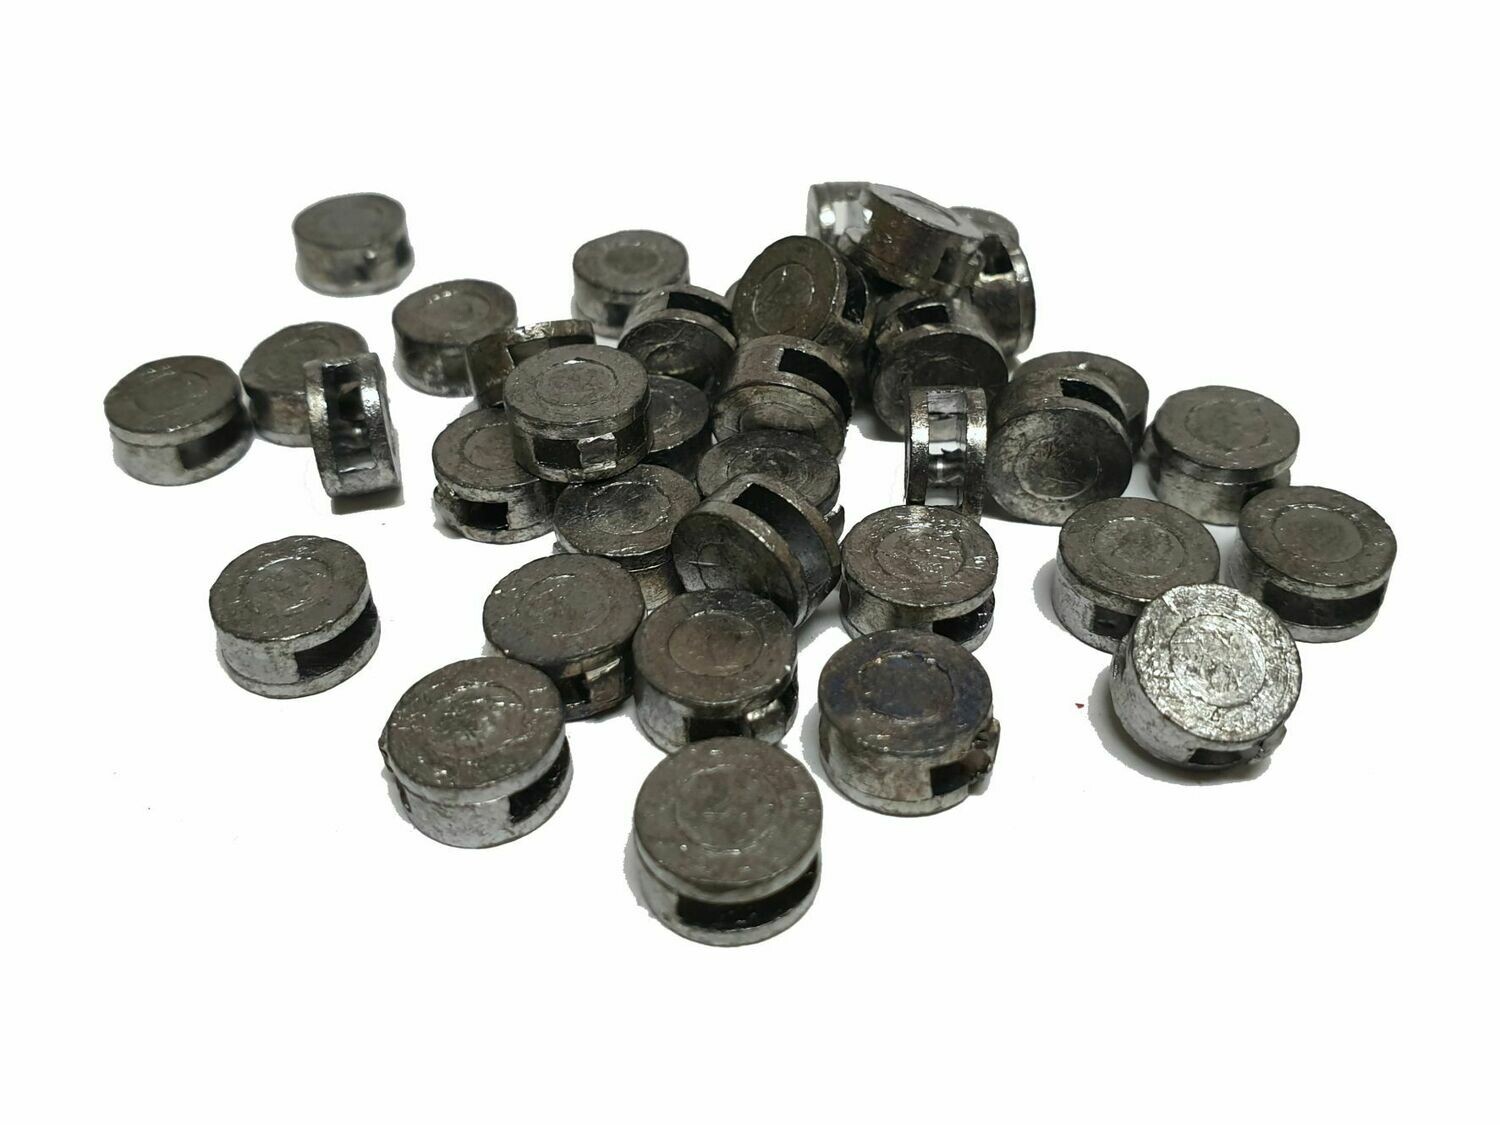 Lead seals 8 mm diameter